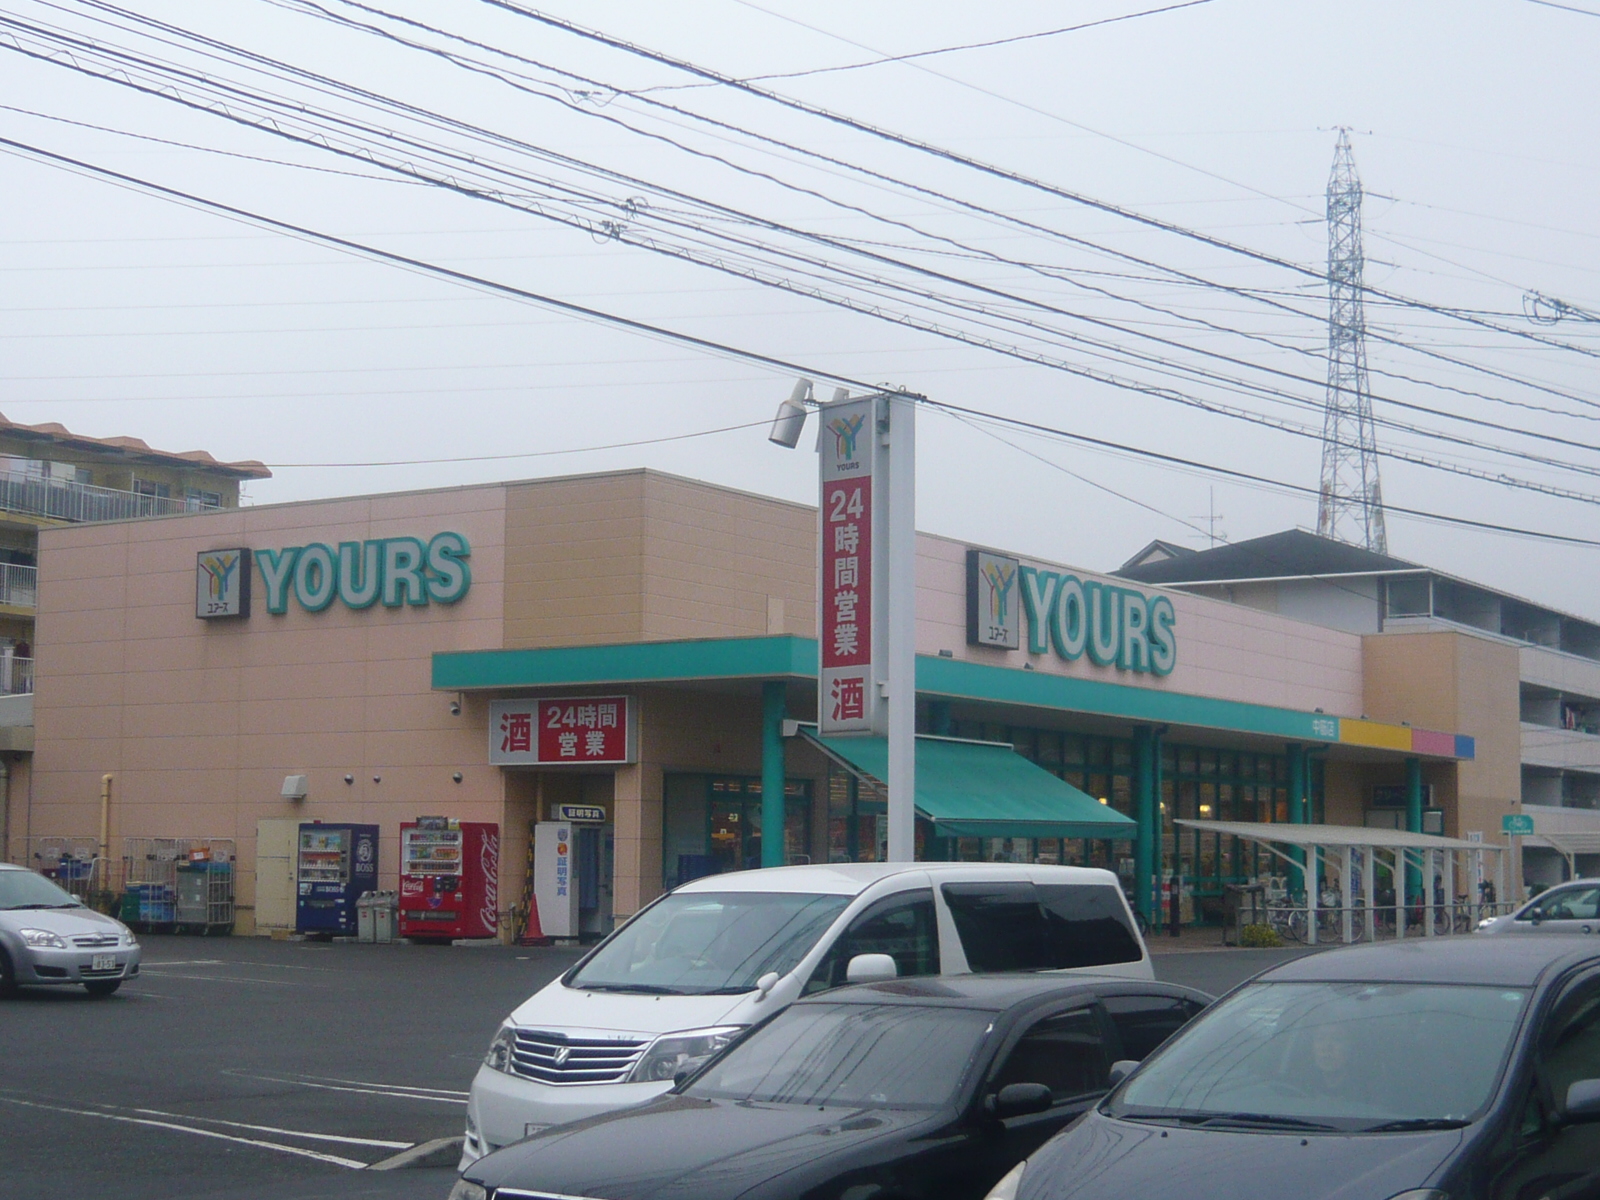 Supermarket. 295m to Yours Nakasuji store (Super)